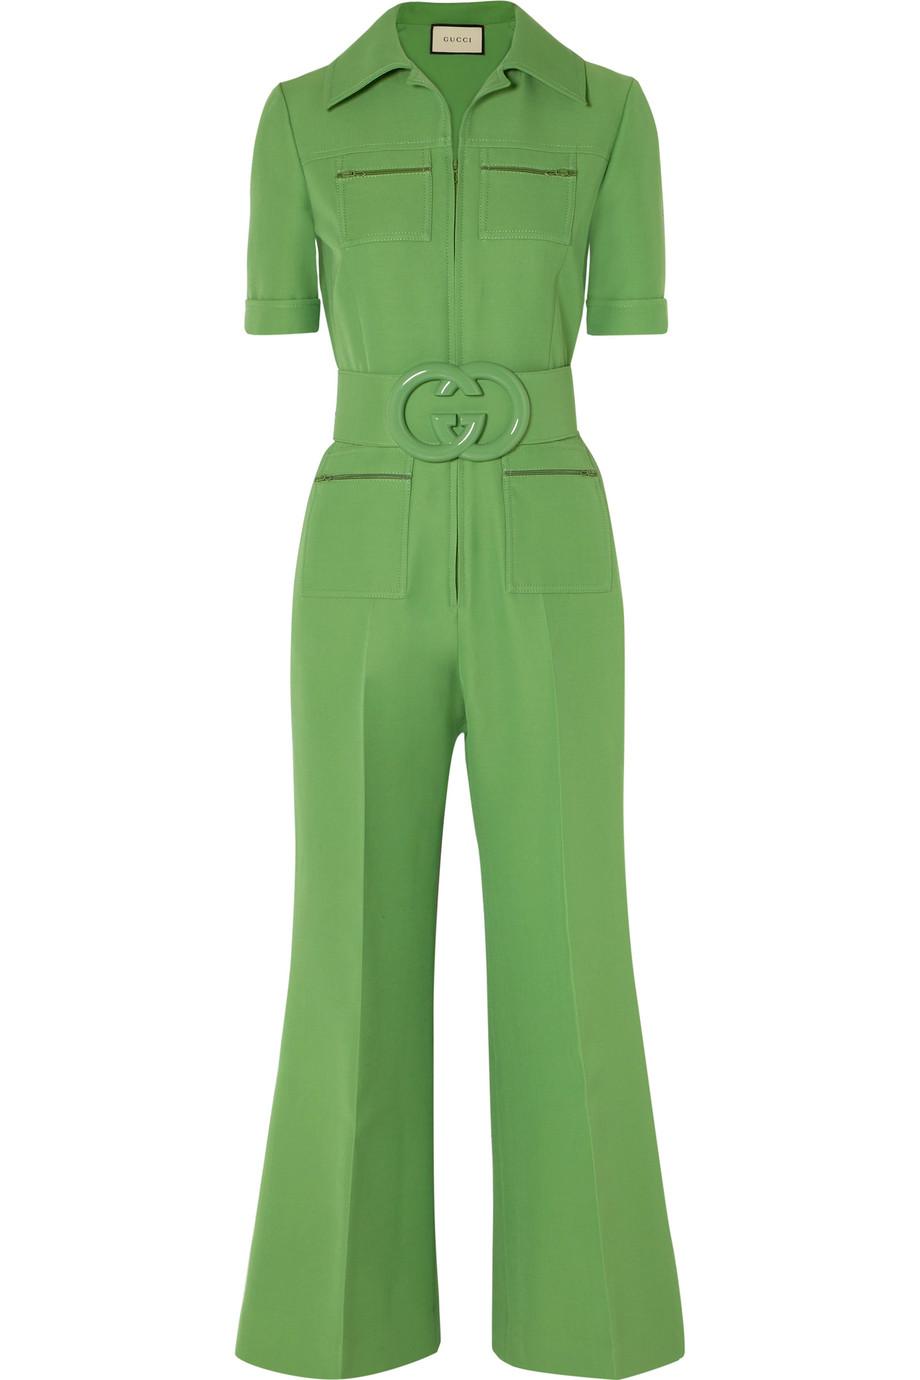 Benadering Theseus kleinhandel Gucci Wool Silk Belted Jumpsuit in Green | Lyst Canada